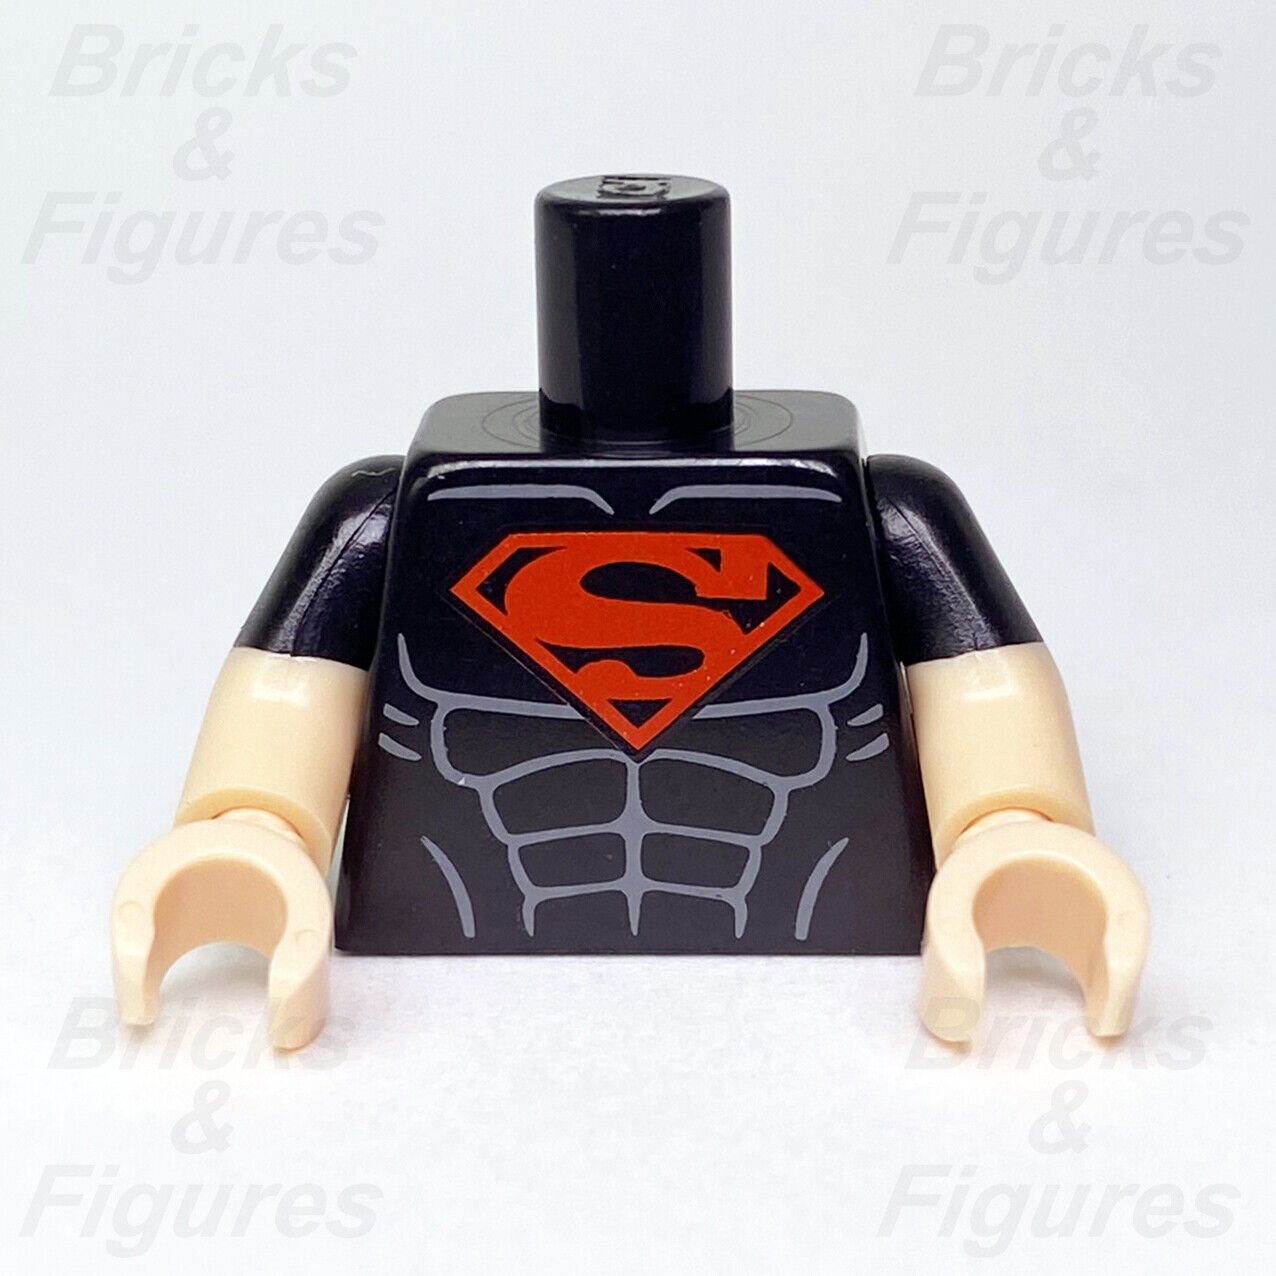 DC Super Heroes LEGO Superboy Torso Body Black S Shirt Minifigure Part 5004076 - Bricks & Figures